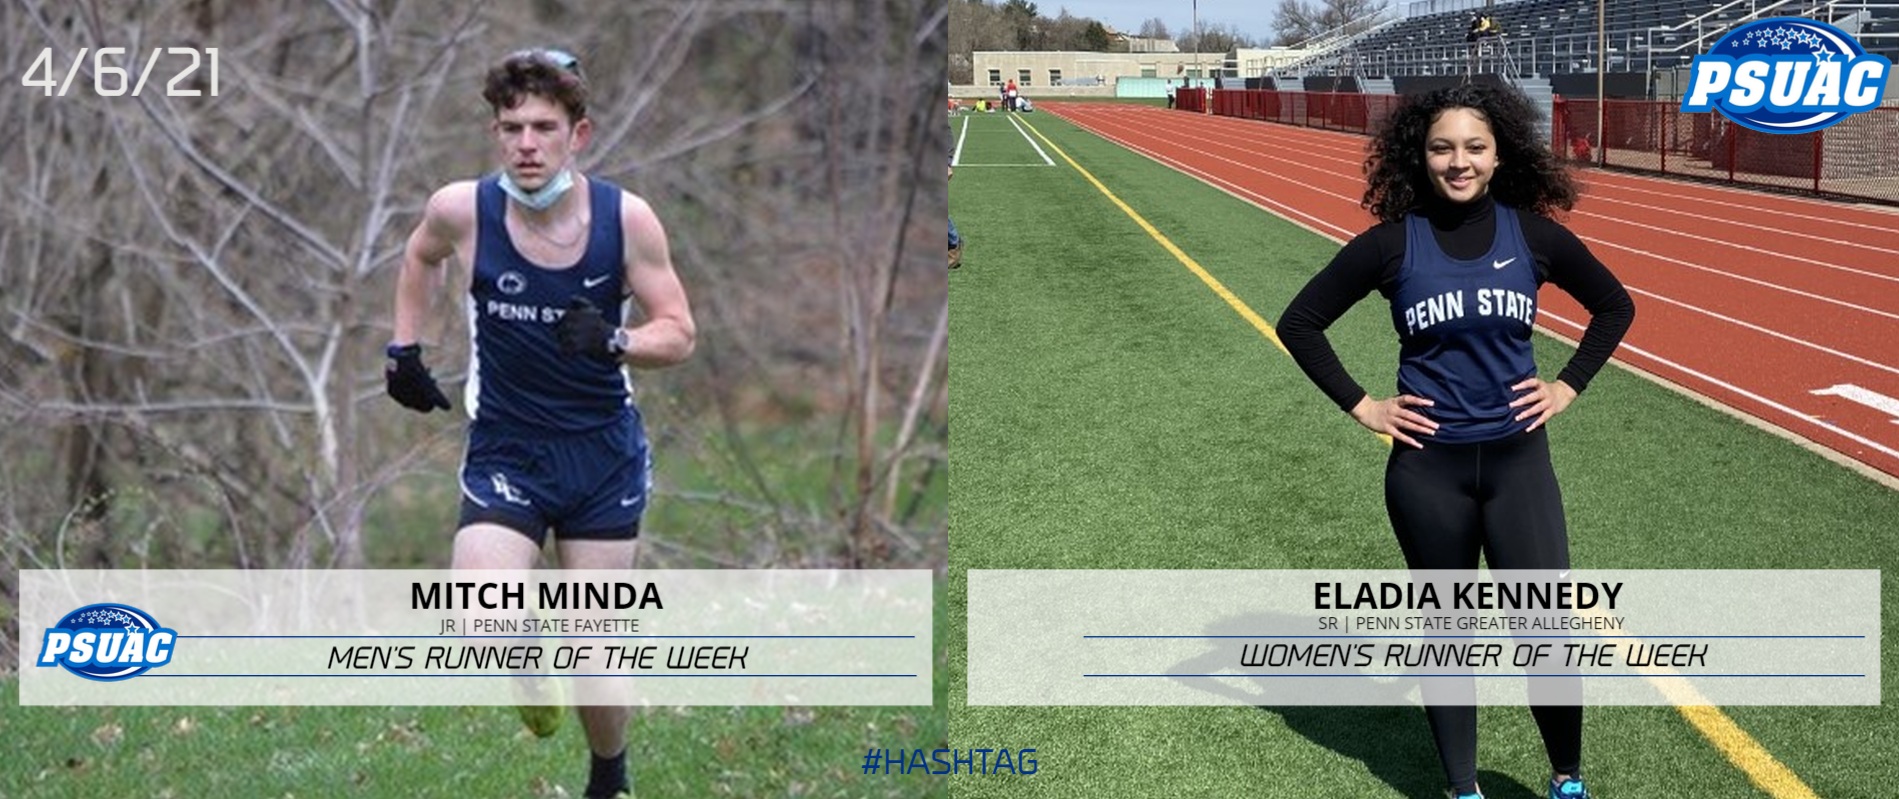 PSUAC Runners of the Week Mitch Minda and Eladia Kennedy.